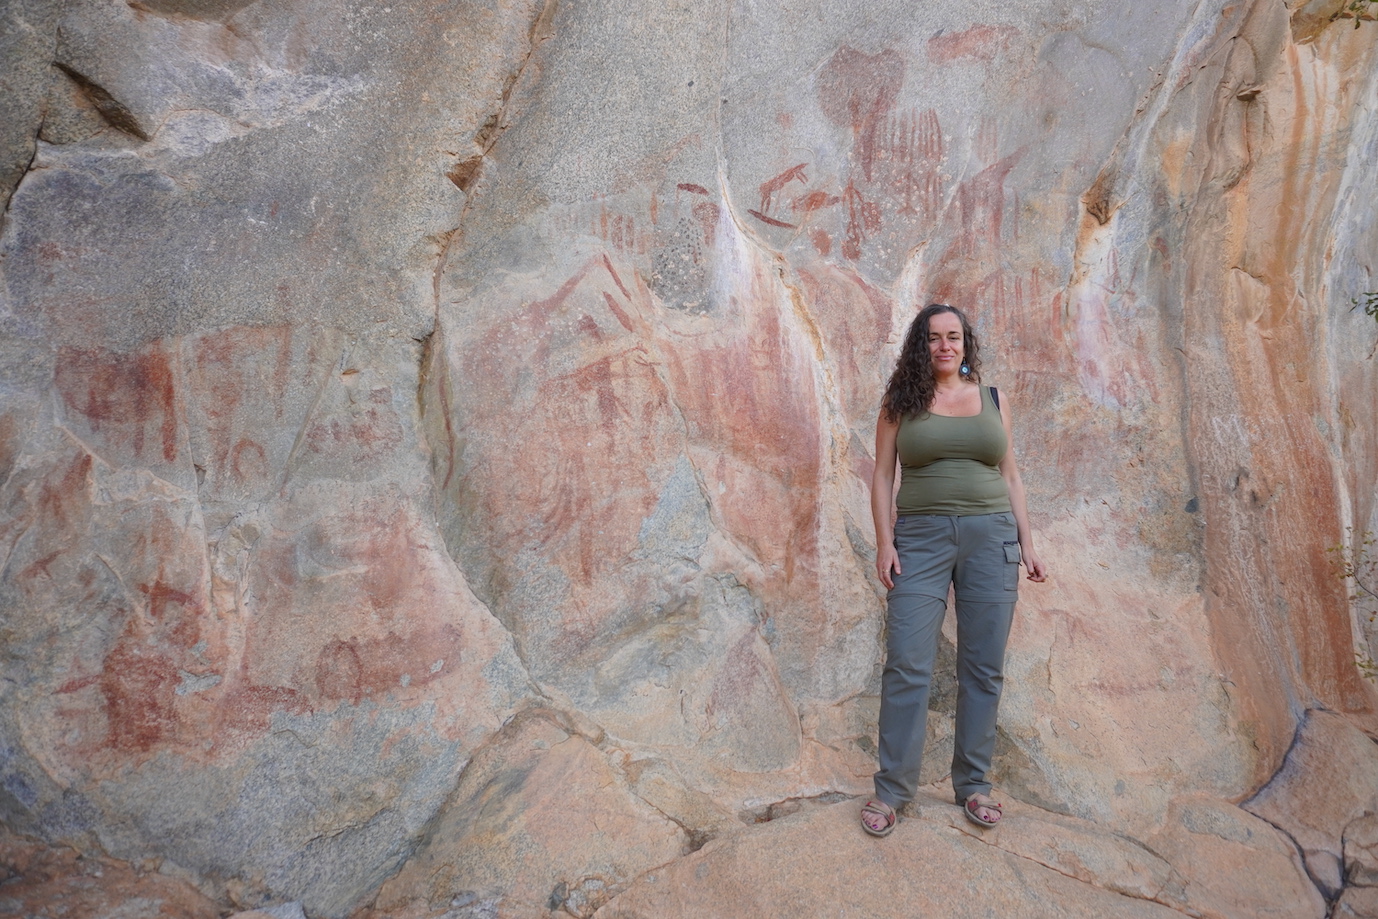 Pilar with some rock art paitings at Igeleke rock, Tanzania